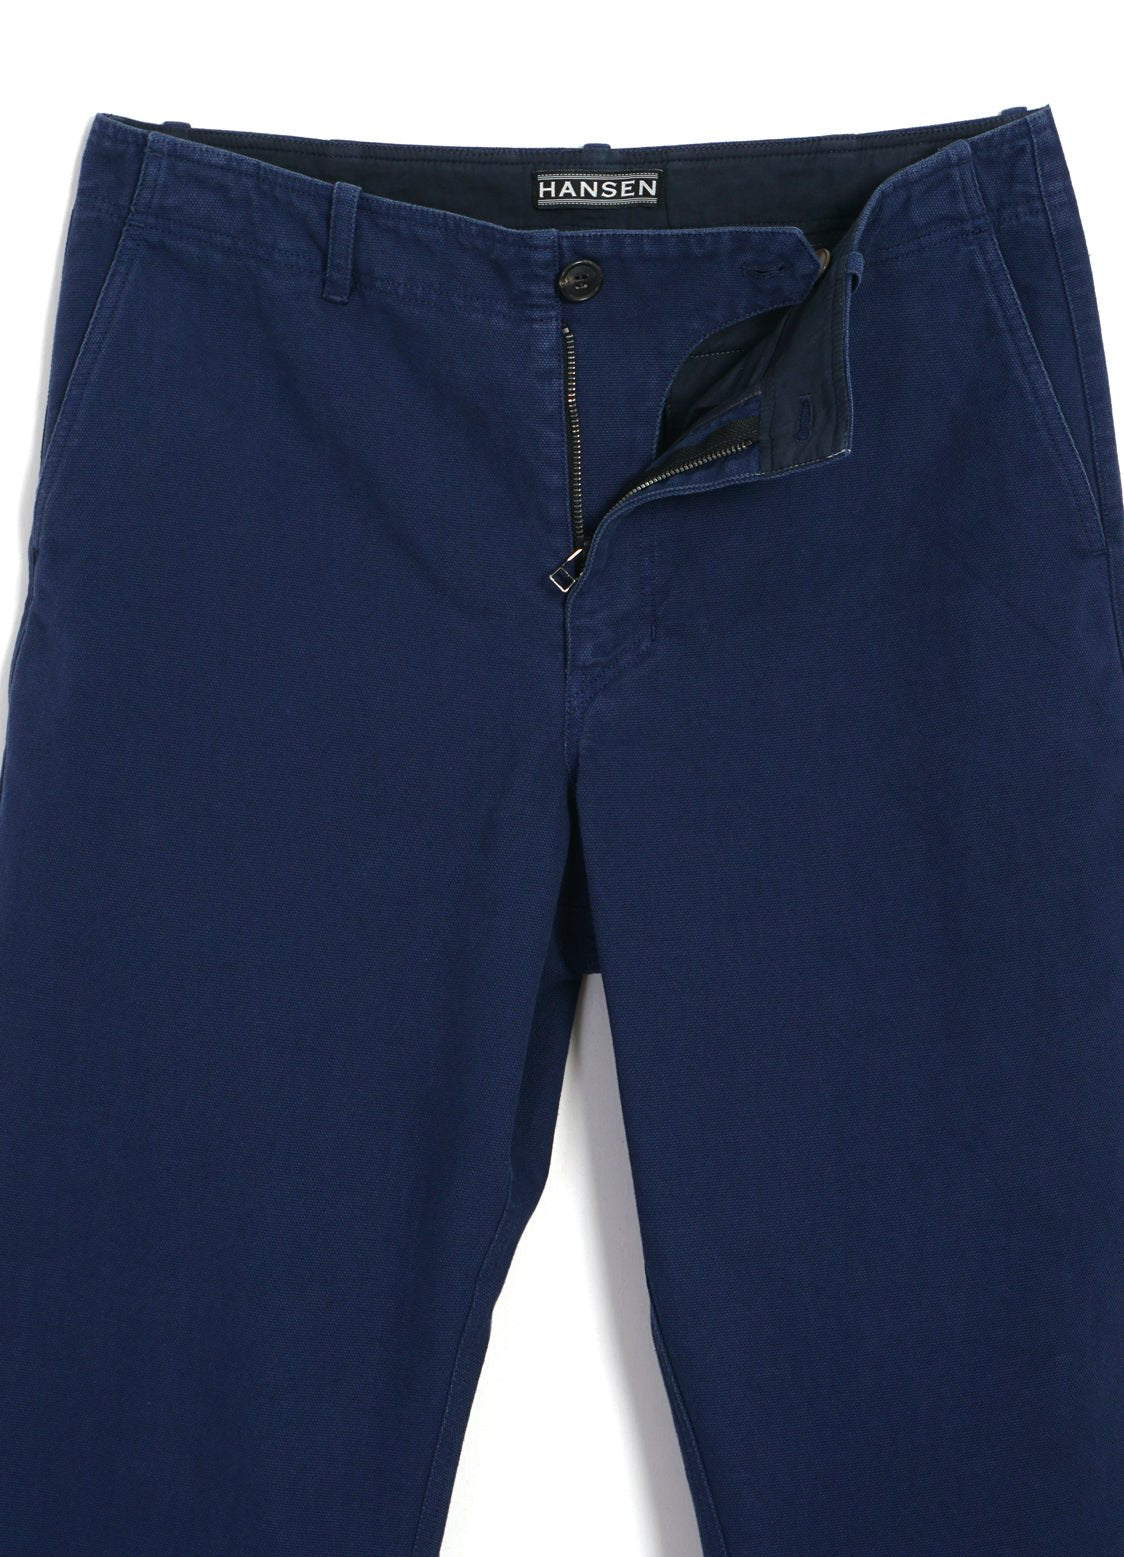 HANSEN GARMENTS - TRYGVE | Wide Cut Cropped Trousers | Work Blue - HANSEN Garments